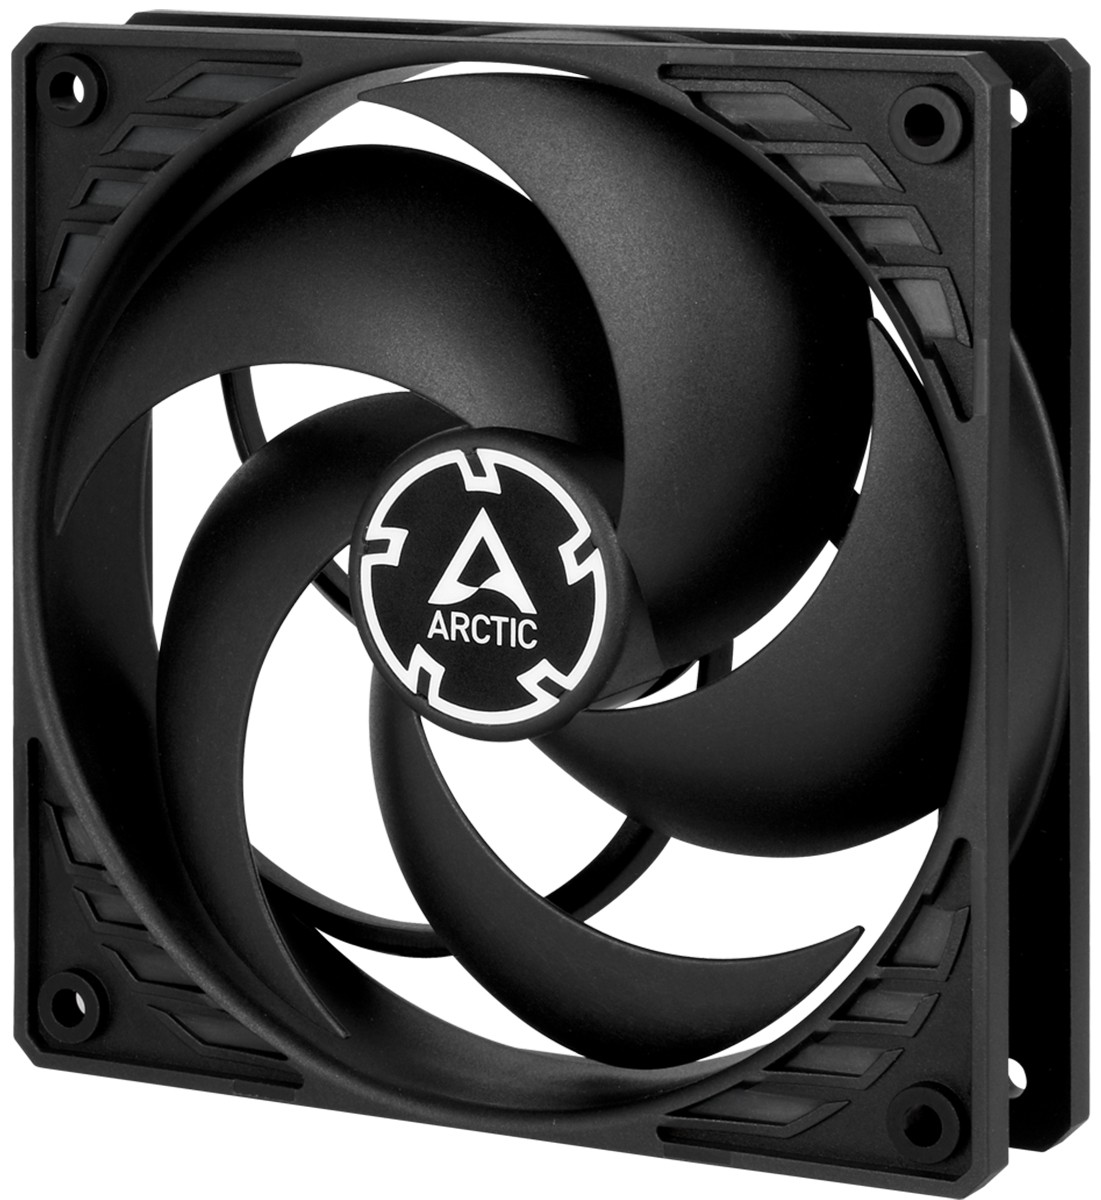 Arctic F12 Silent Case Fan - 120mm case fan with low speed - Black Color